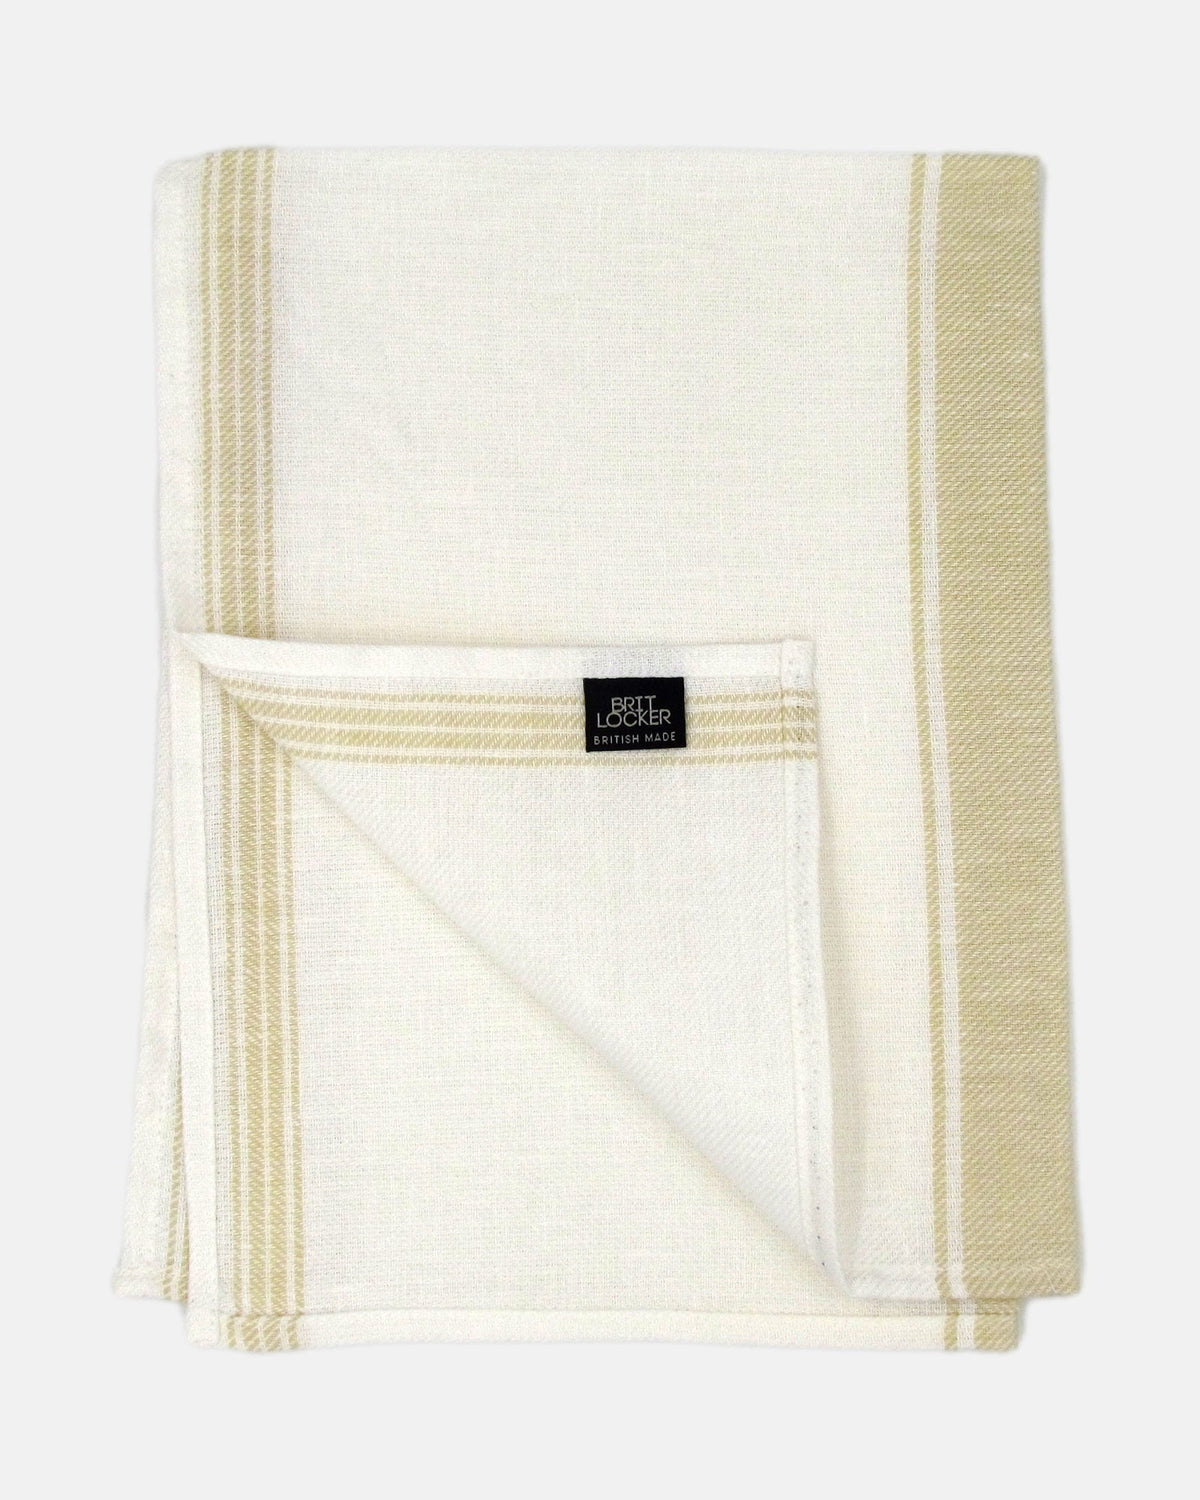 Yellow Twill 100% Linen Tea Towel - BRIT LOCKER